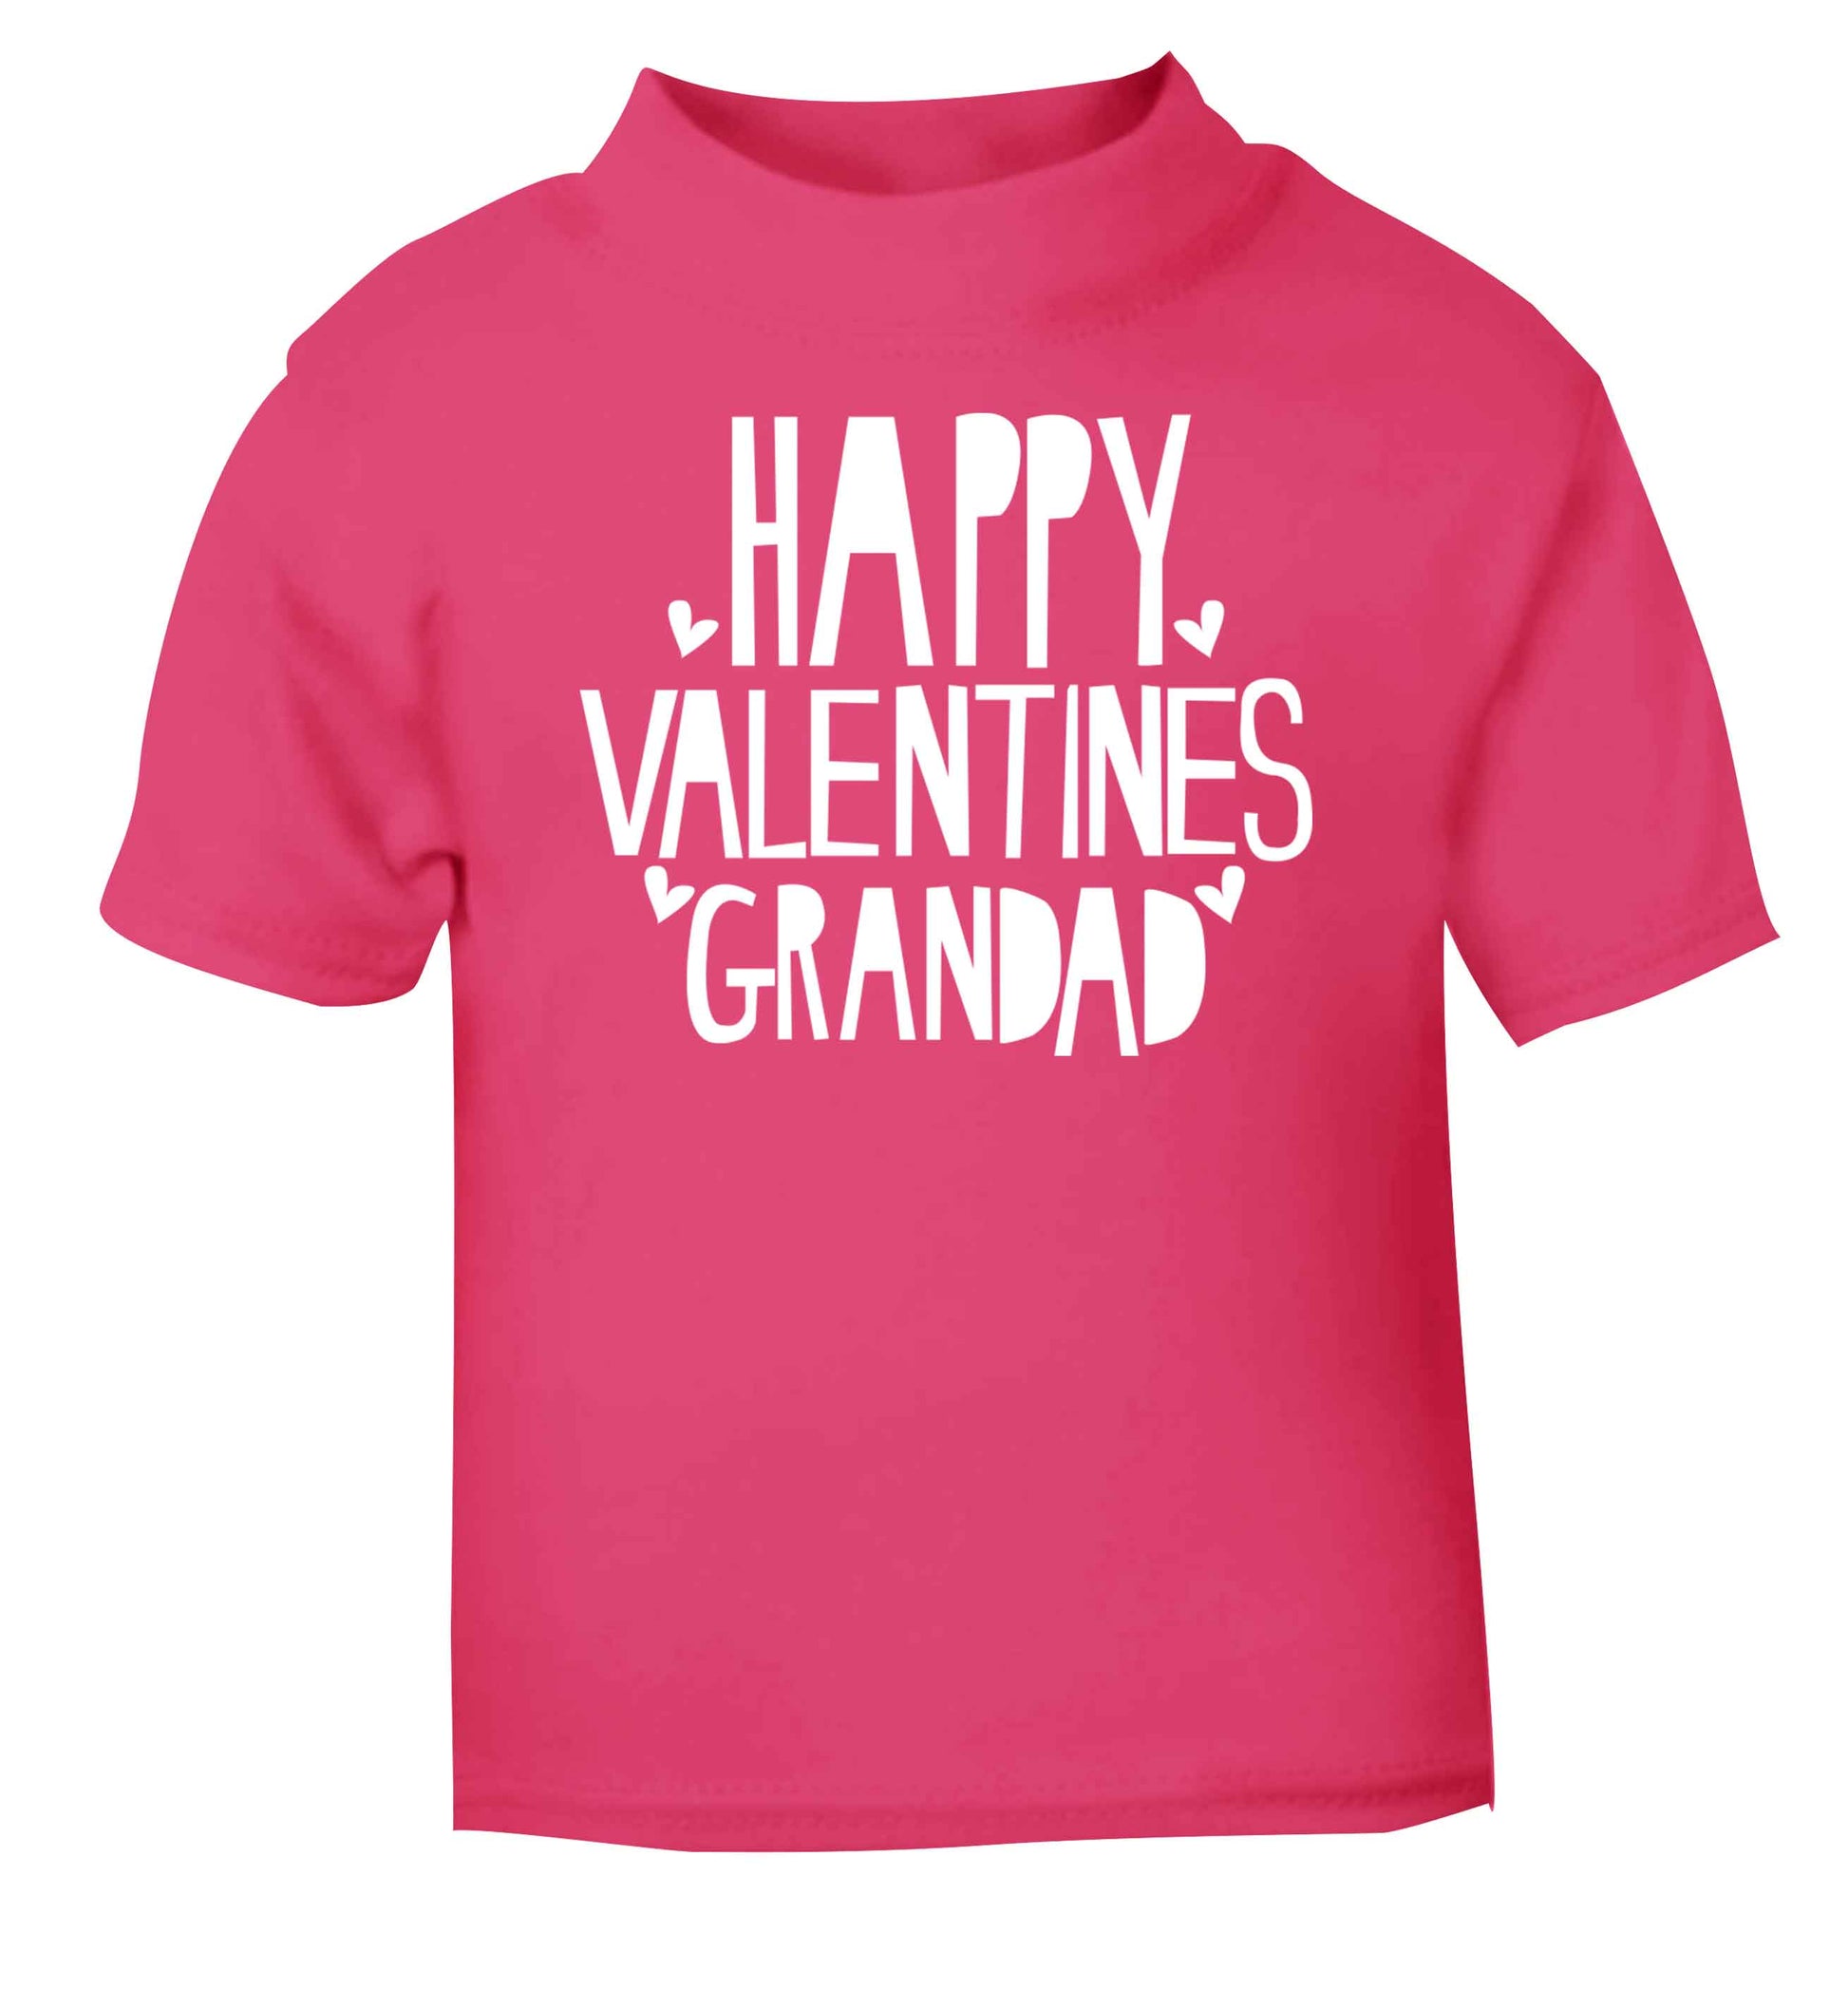 Happy valentines grandad pink baby toddler Tshirt 2 Years